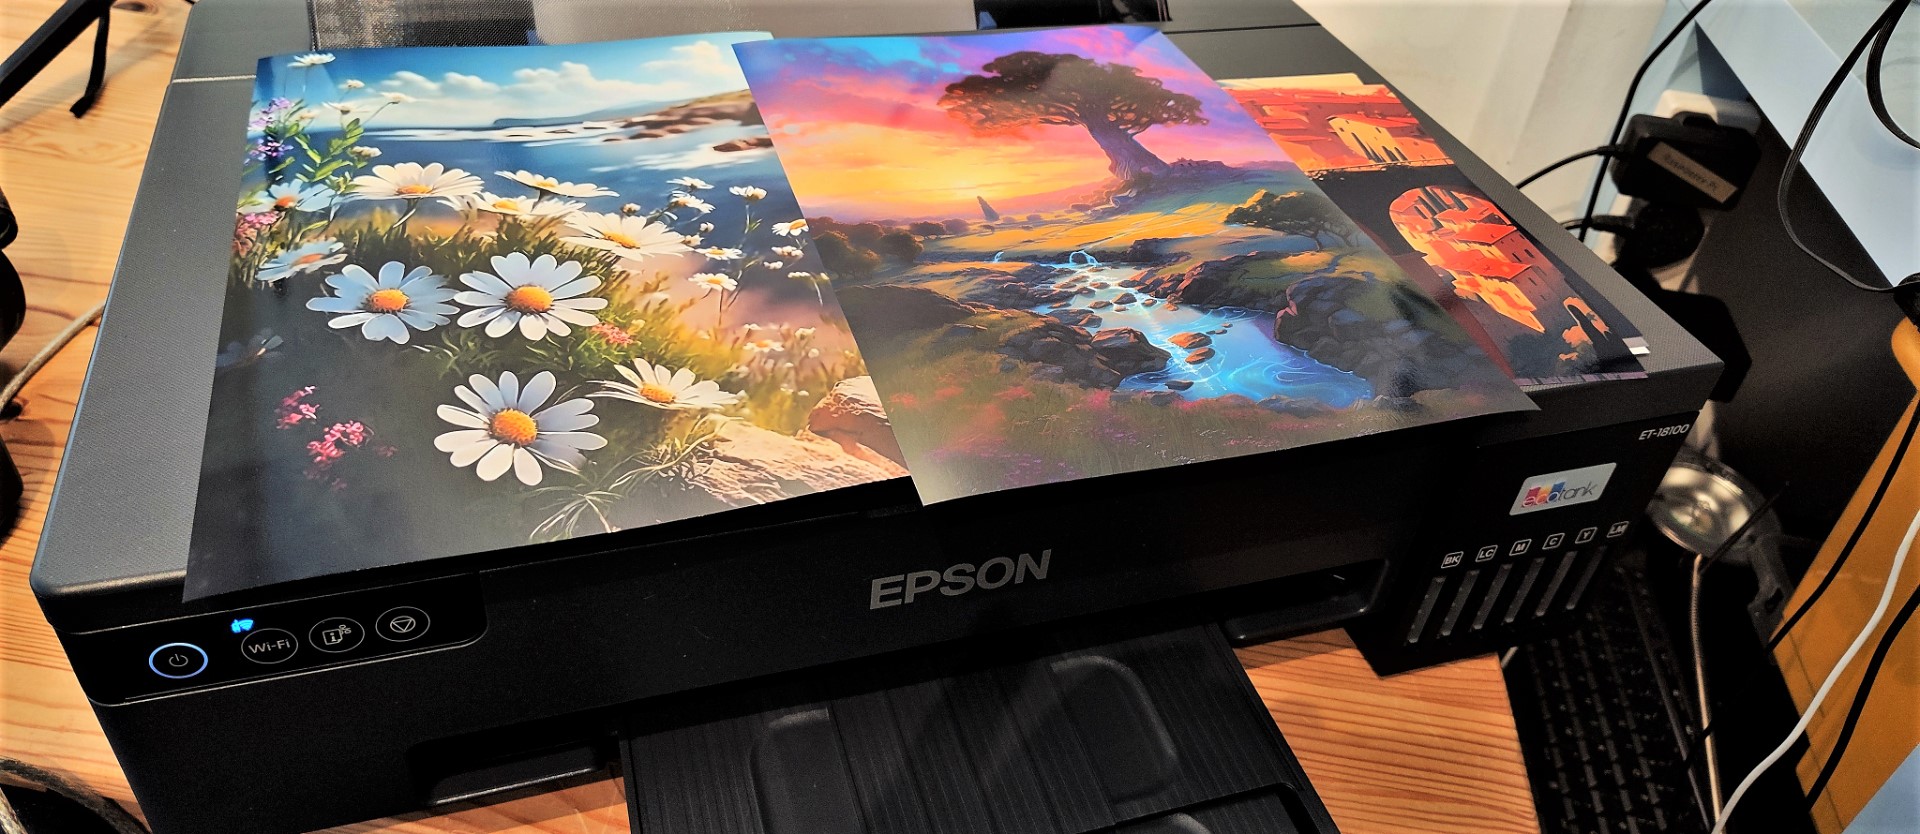 Epson EcoTank A3+ Photo Printer review | TechRadar